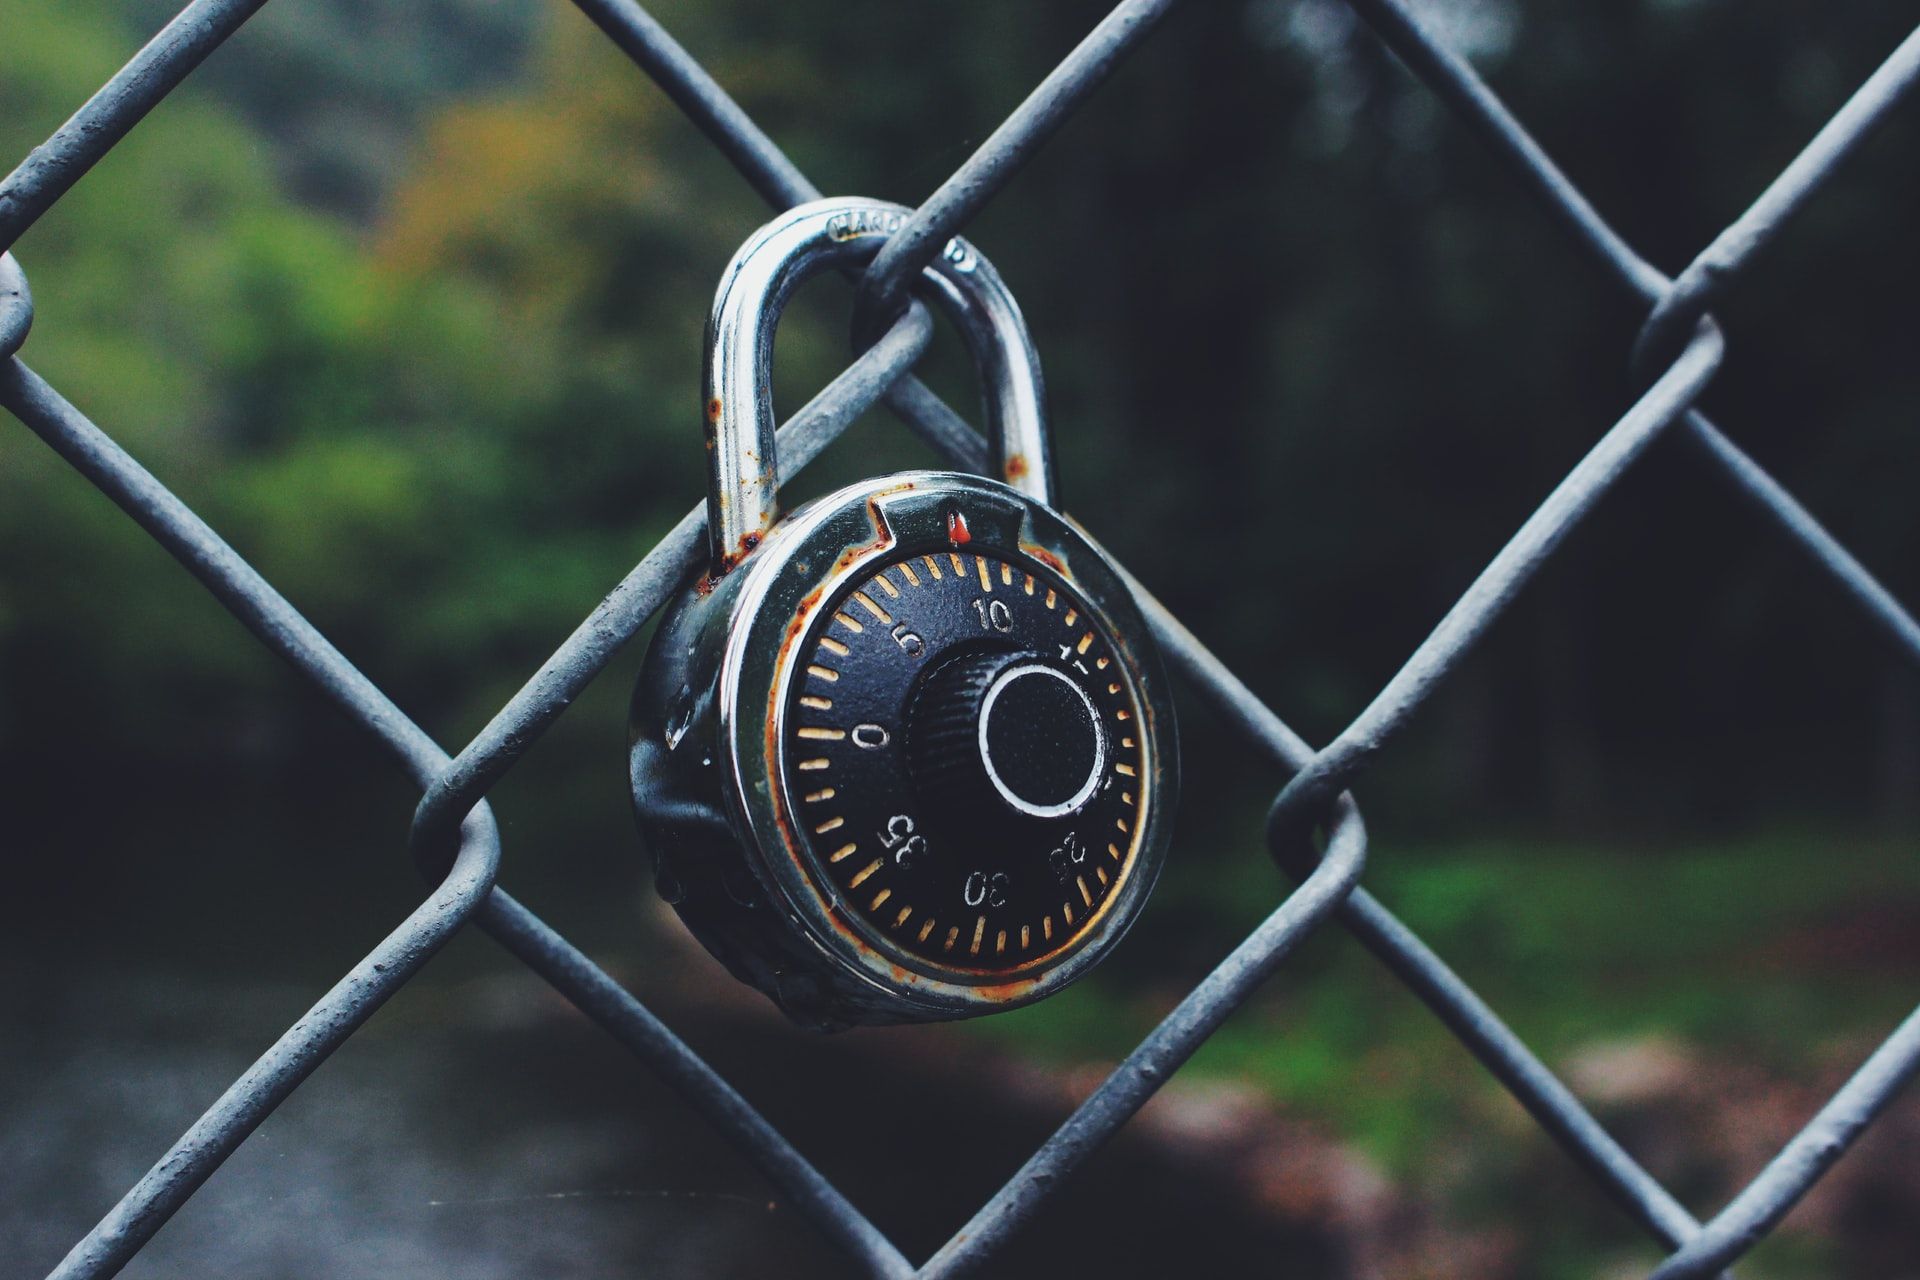 A sturdy lock on a fence